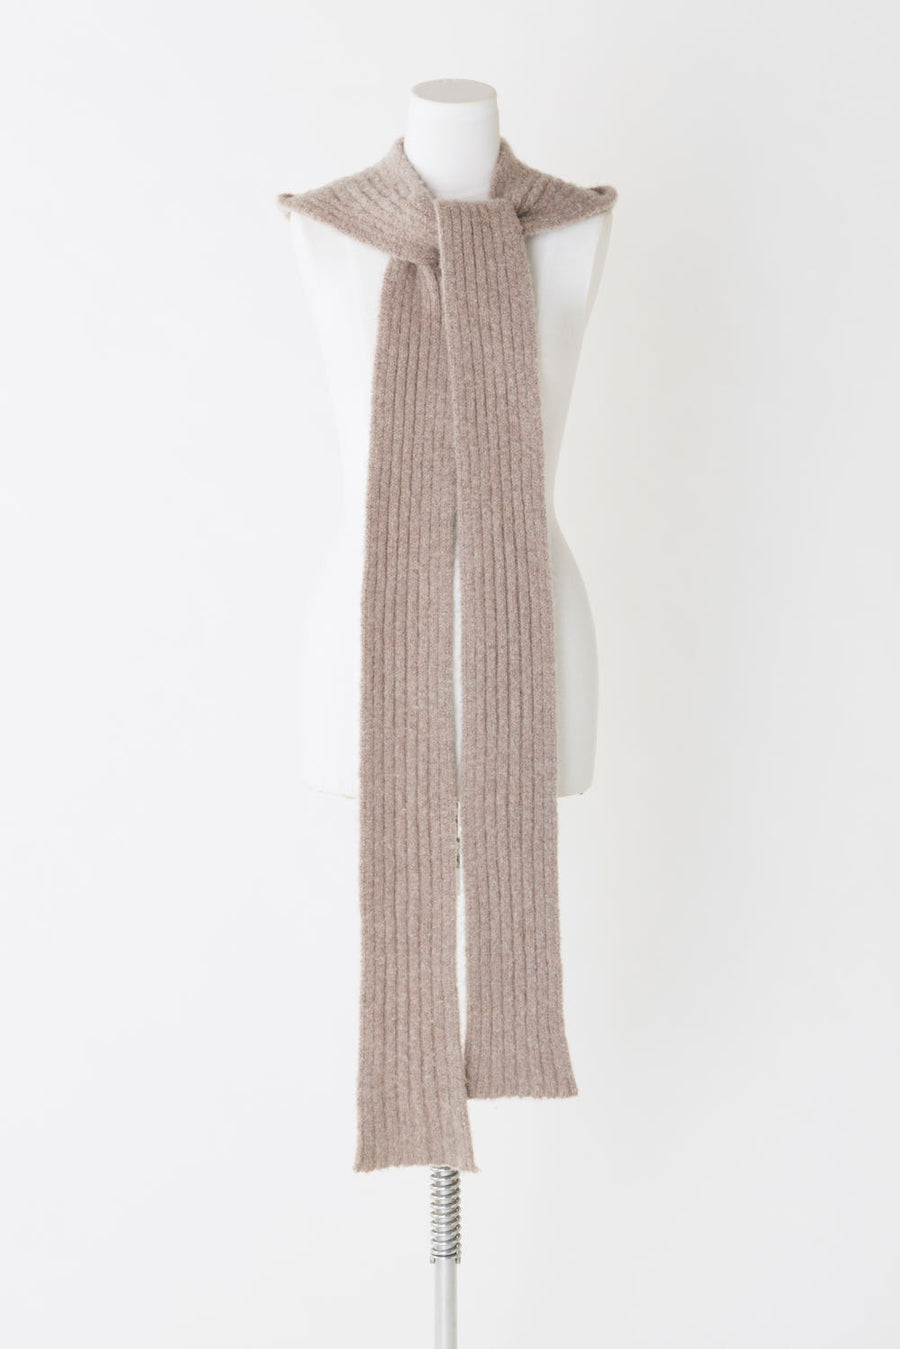 FETICO (Fetico) Wool Cashmere Knit Hooded Scarf Gray Beige Mail